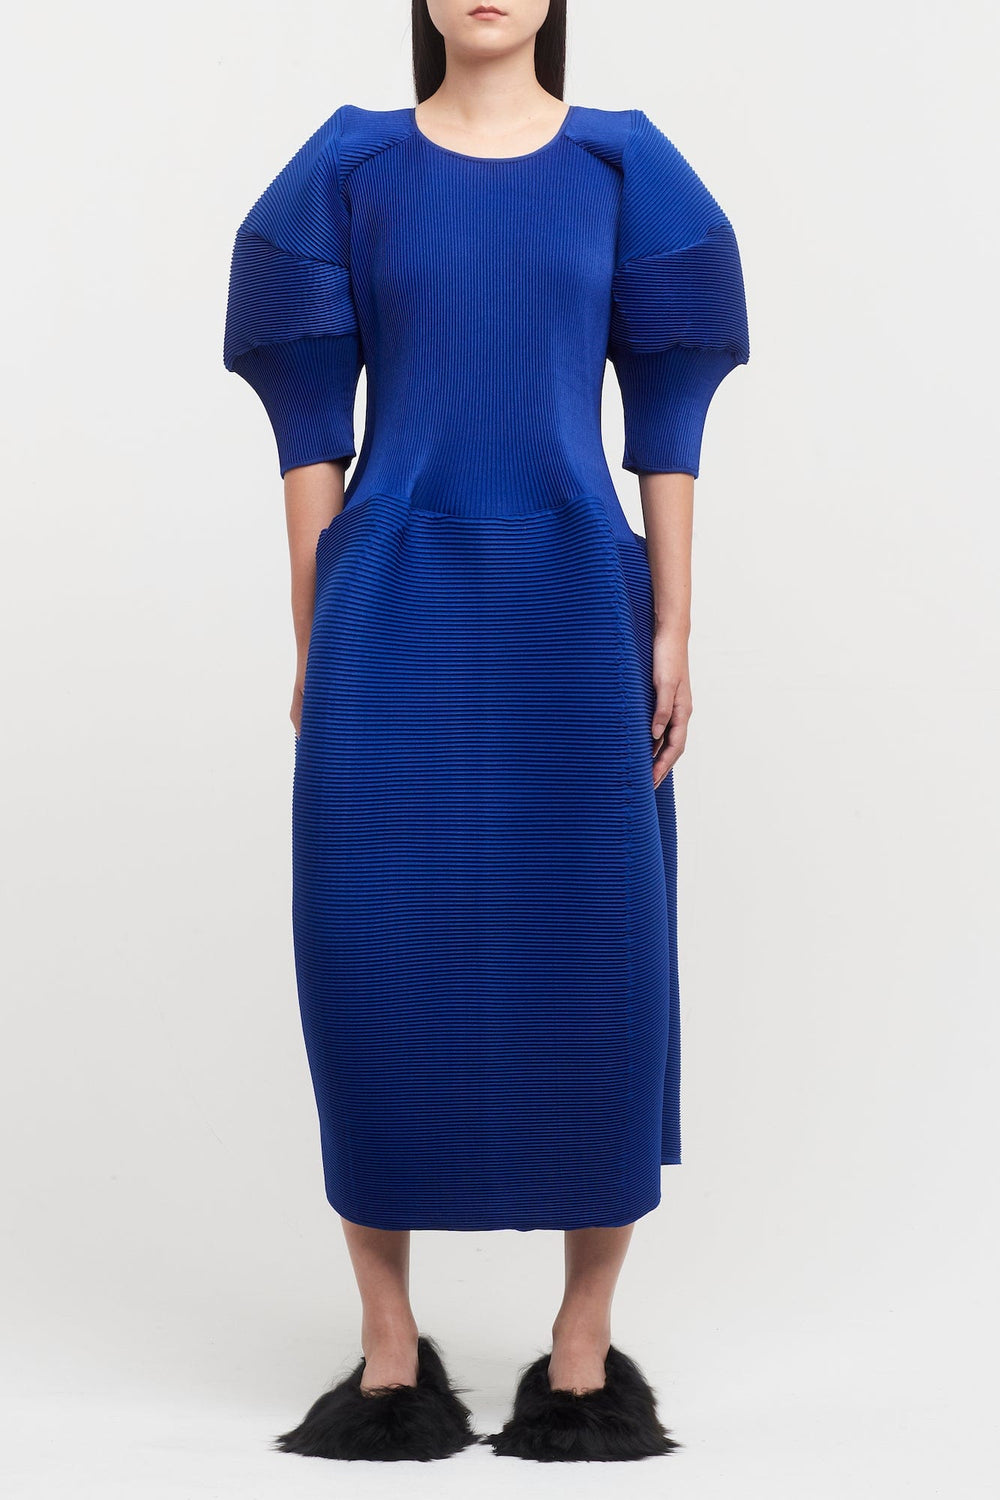 Baumeister Antidote and – Ripple Melitta Fashion Sleeve Blue Lifestyle Big Dress